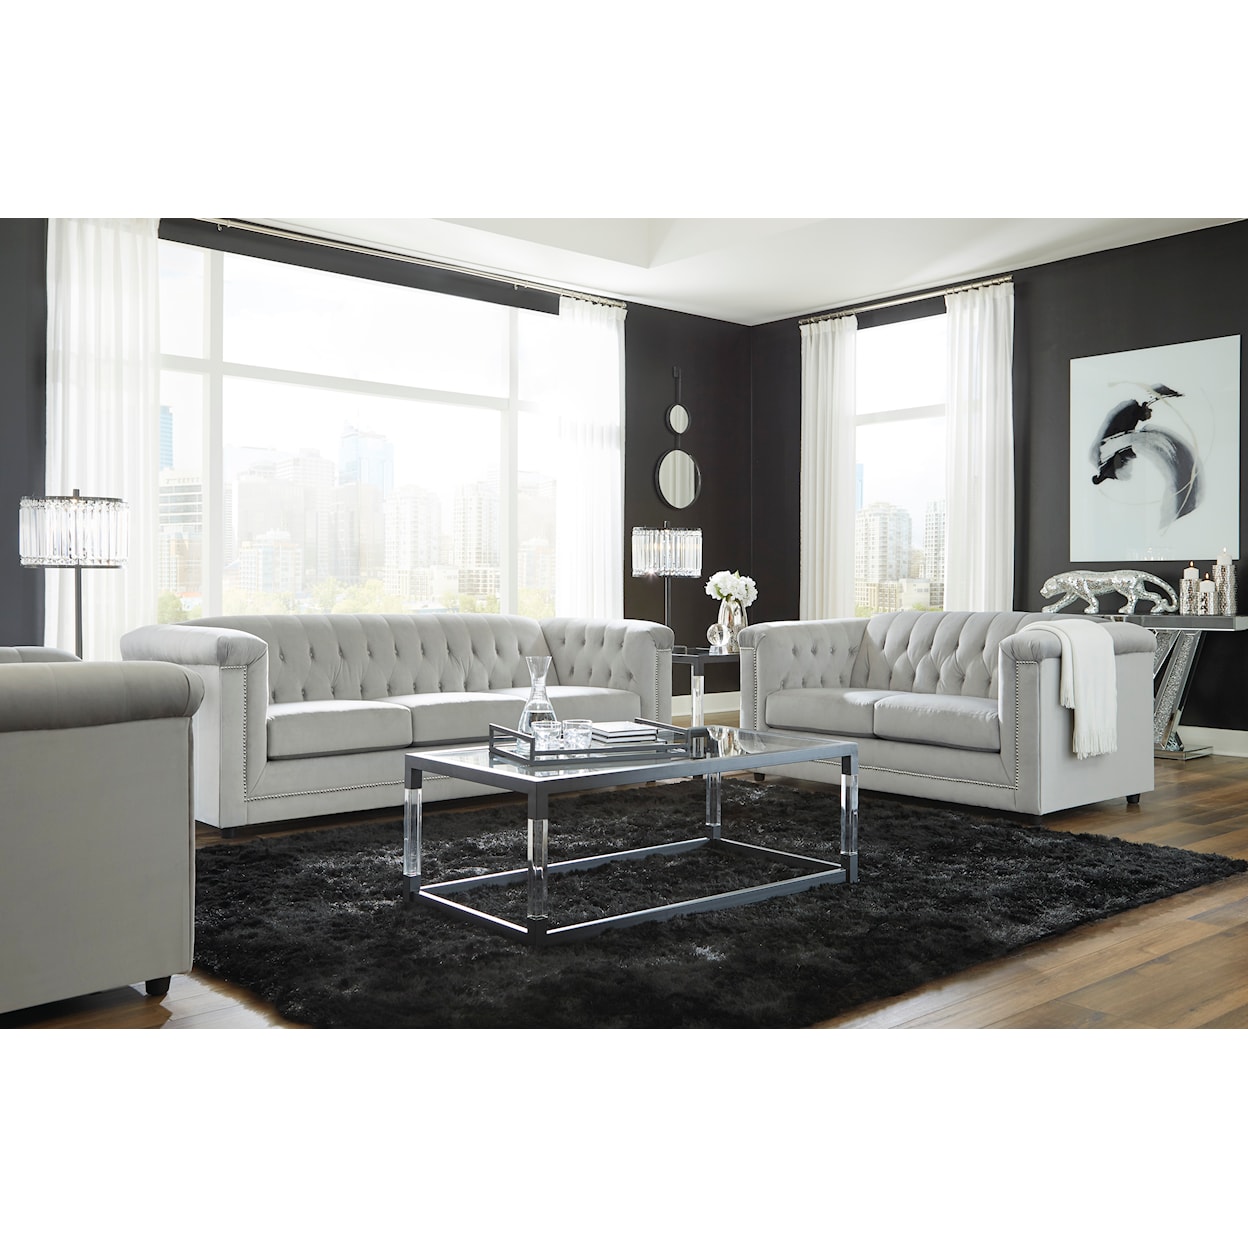 Ashley Furniture Signature Design Josanna Living Room Set